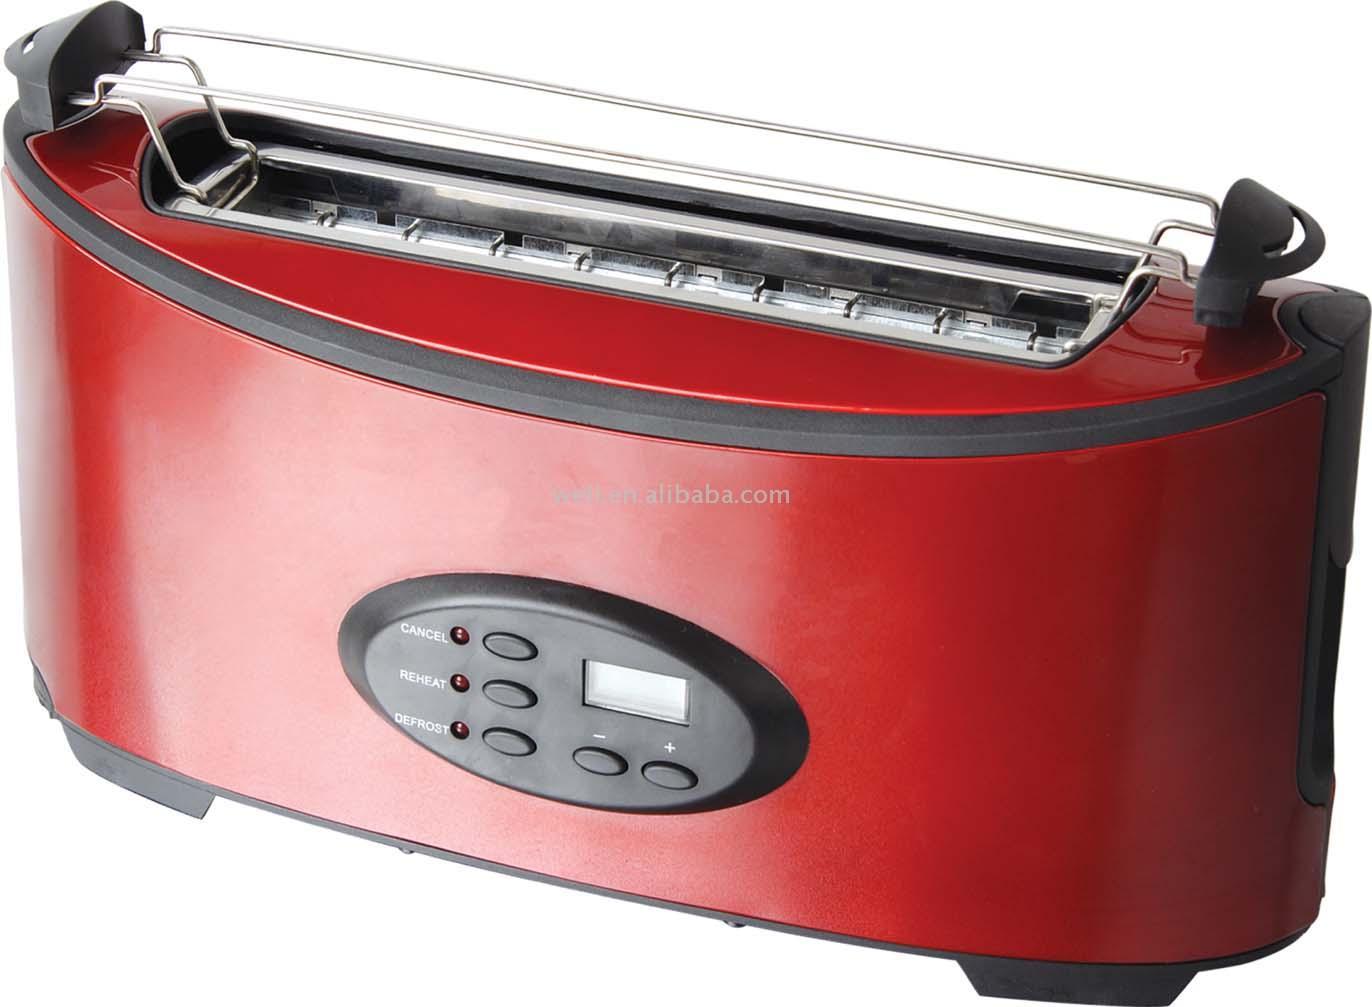  Electric S/S Pop-Up Toaster (Электрический S / S Pop-Up Тостер)